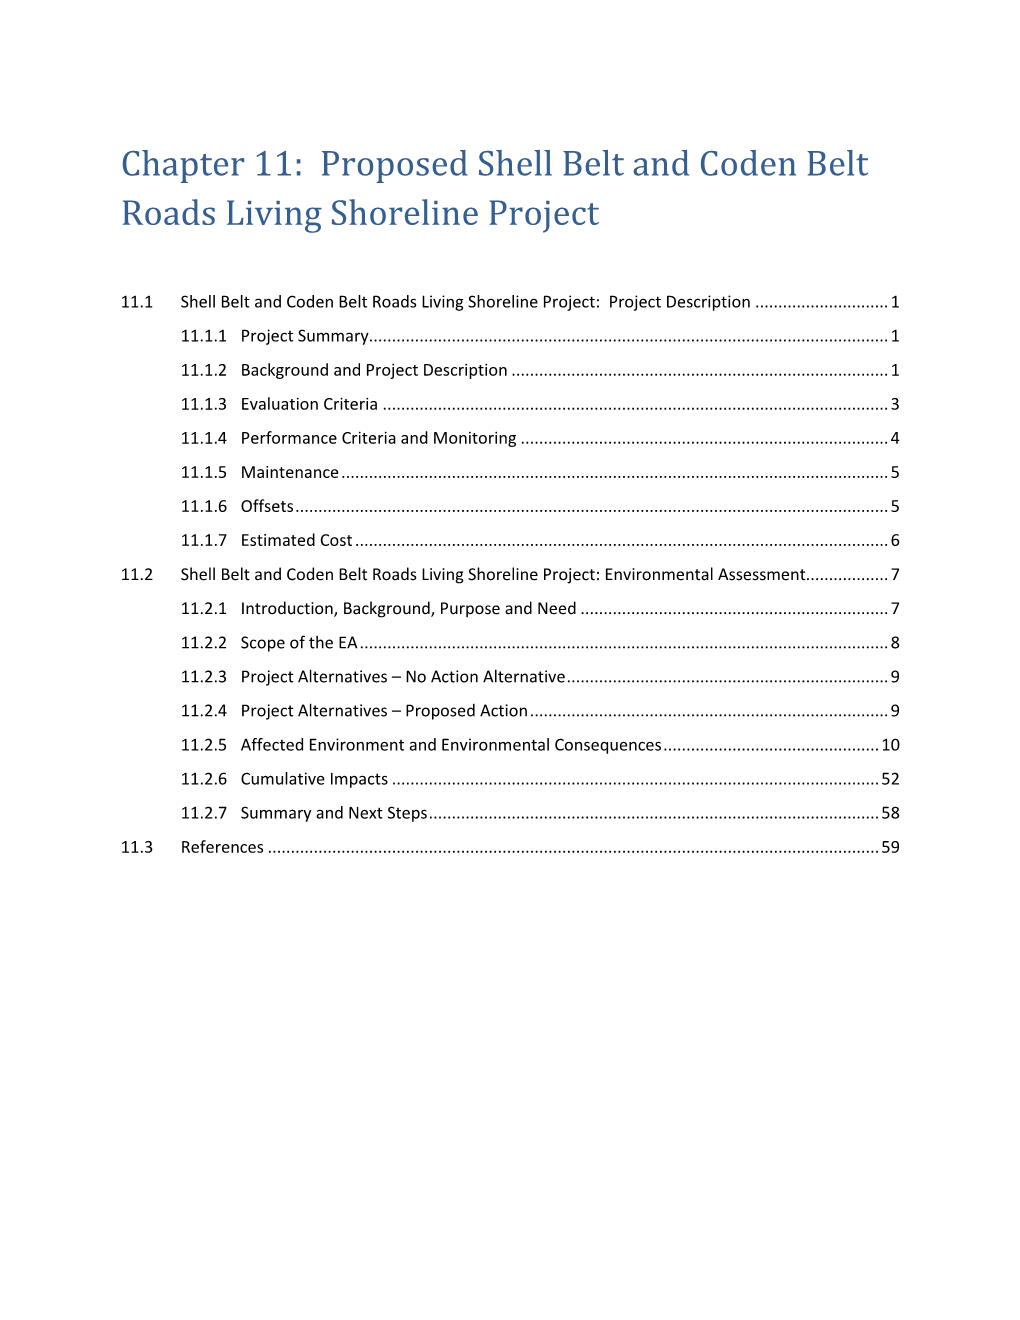 Proposed Shell Belt and Coden Belt Roads Living Shoreline Project